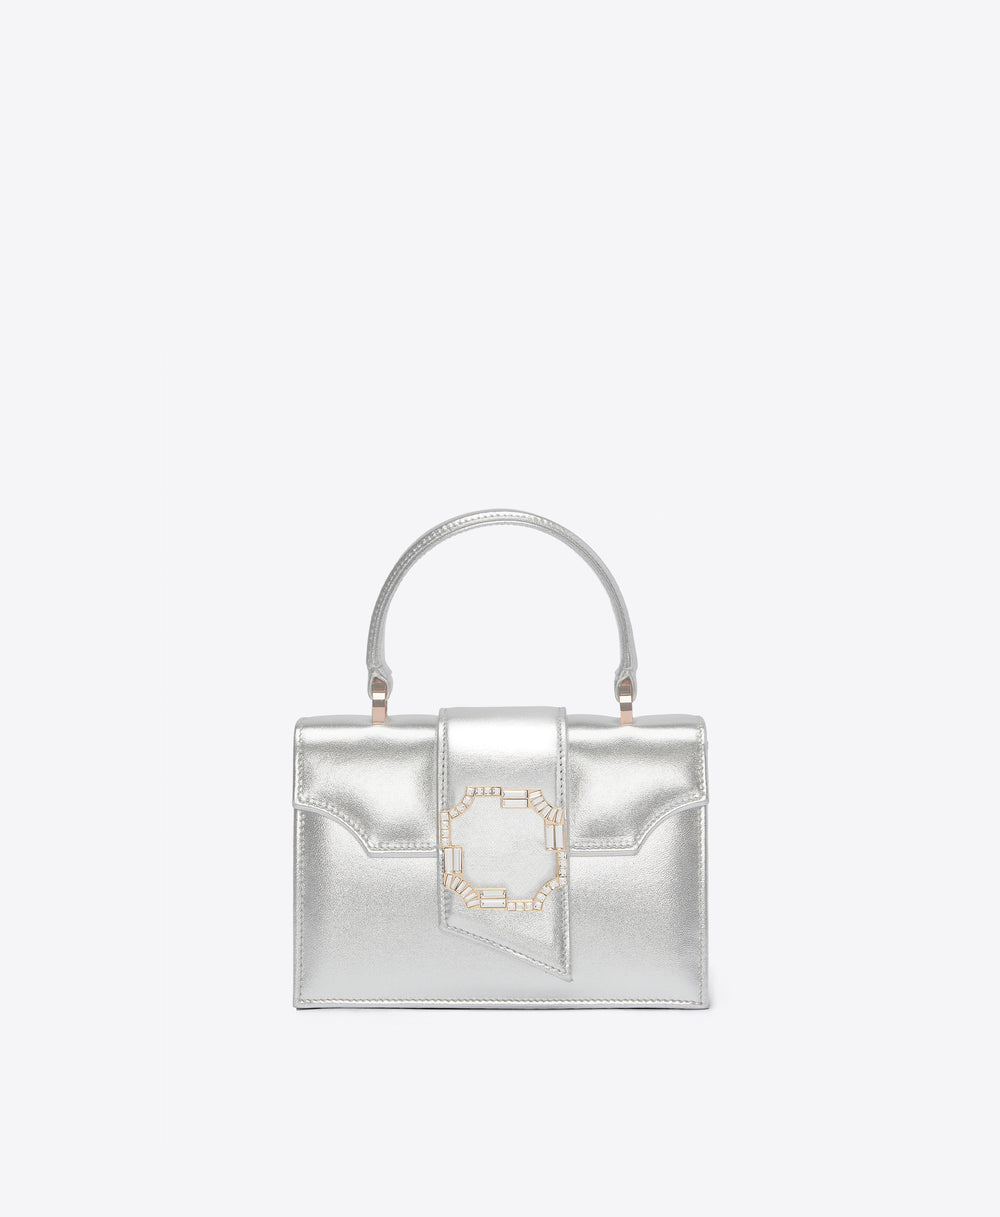 Audrey Silver Metallic Leather Mini Handbag Malone Souliers